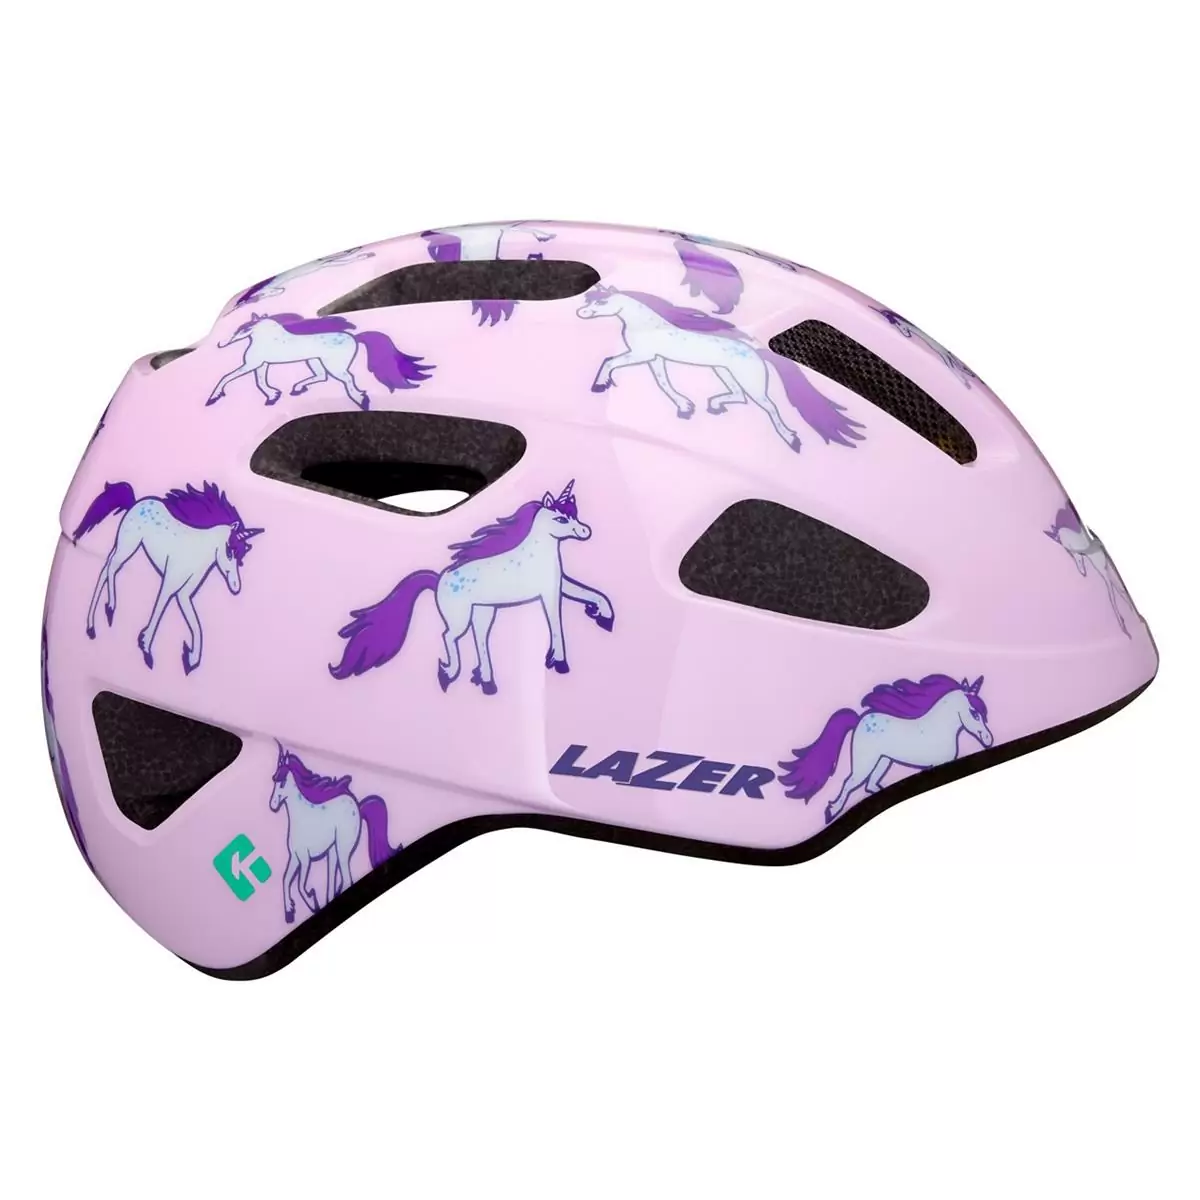 Nutz Kids Helmet KinetiCore CE Unicorn Pink/White One Size (50-56cm) - image